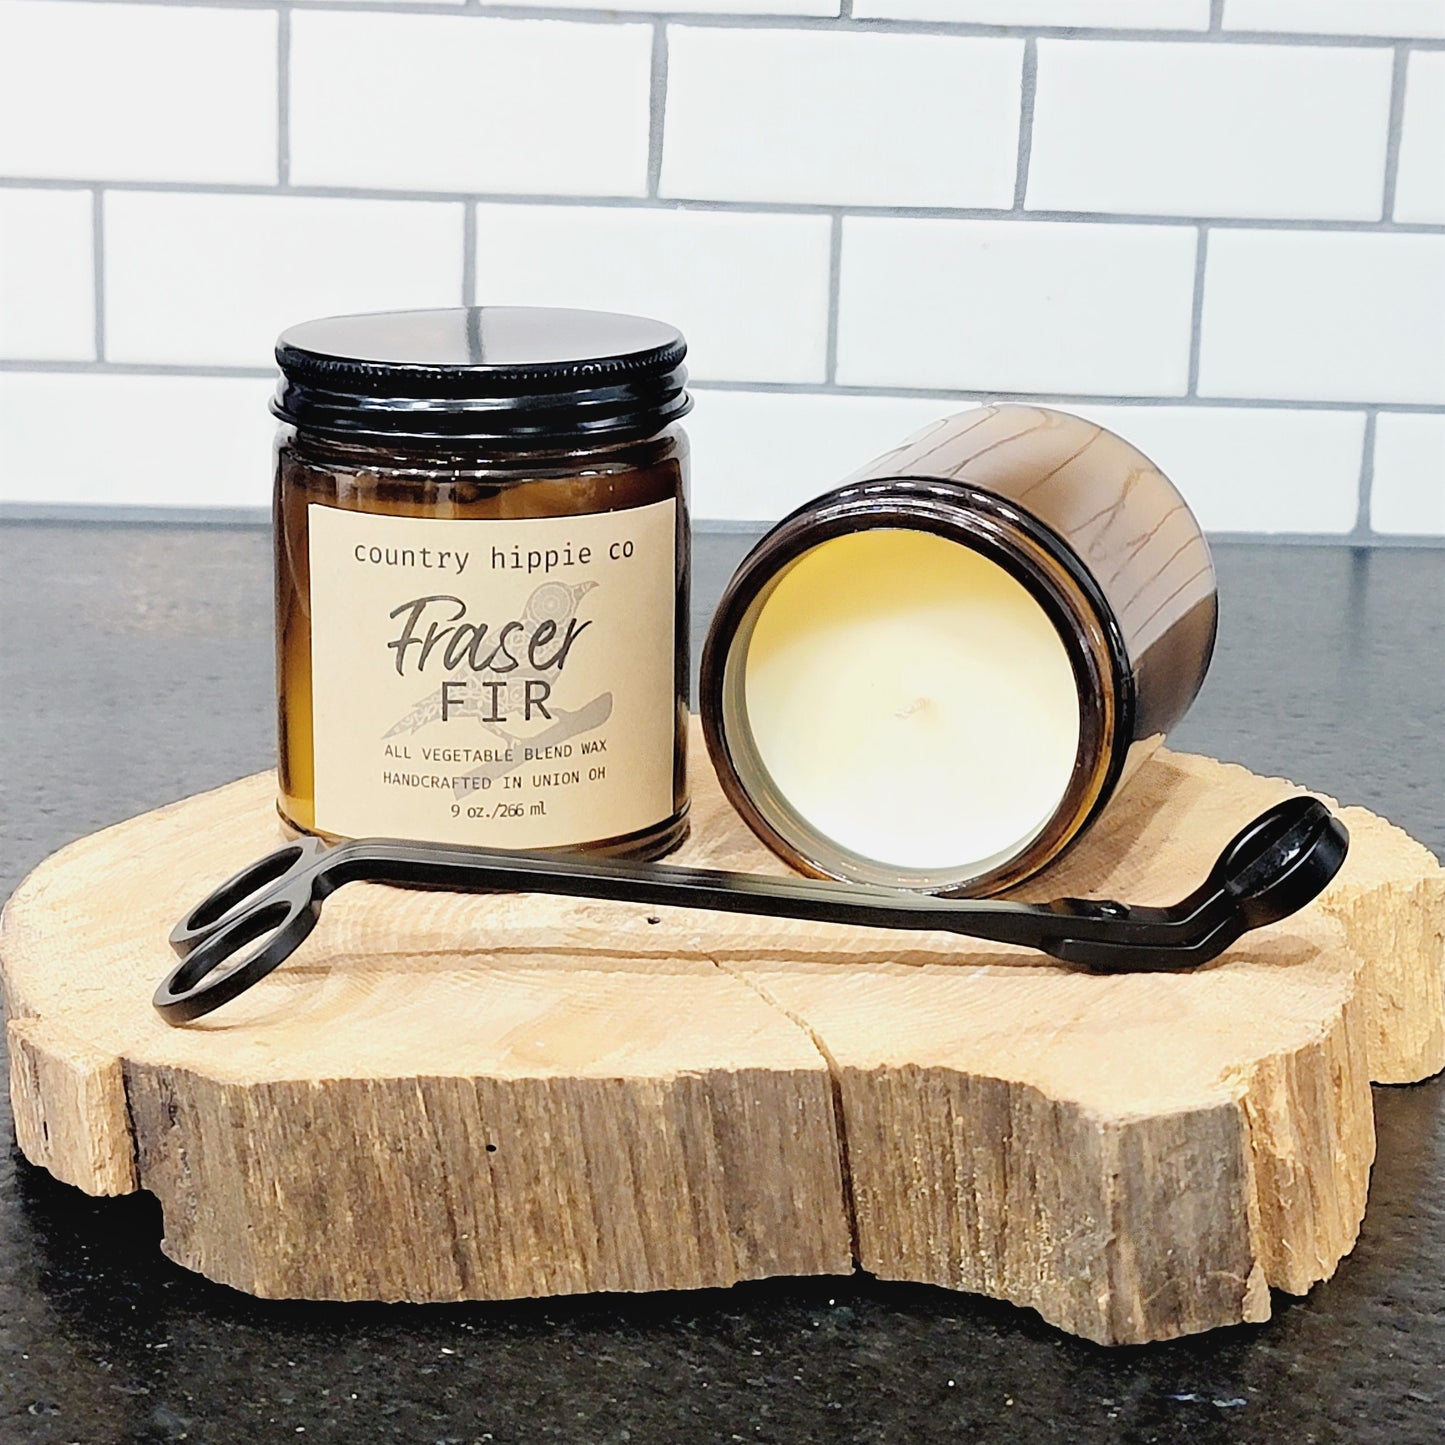 Fraser Fir Apothecary-inspired  Jar Candle 9 oz.